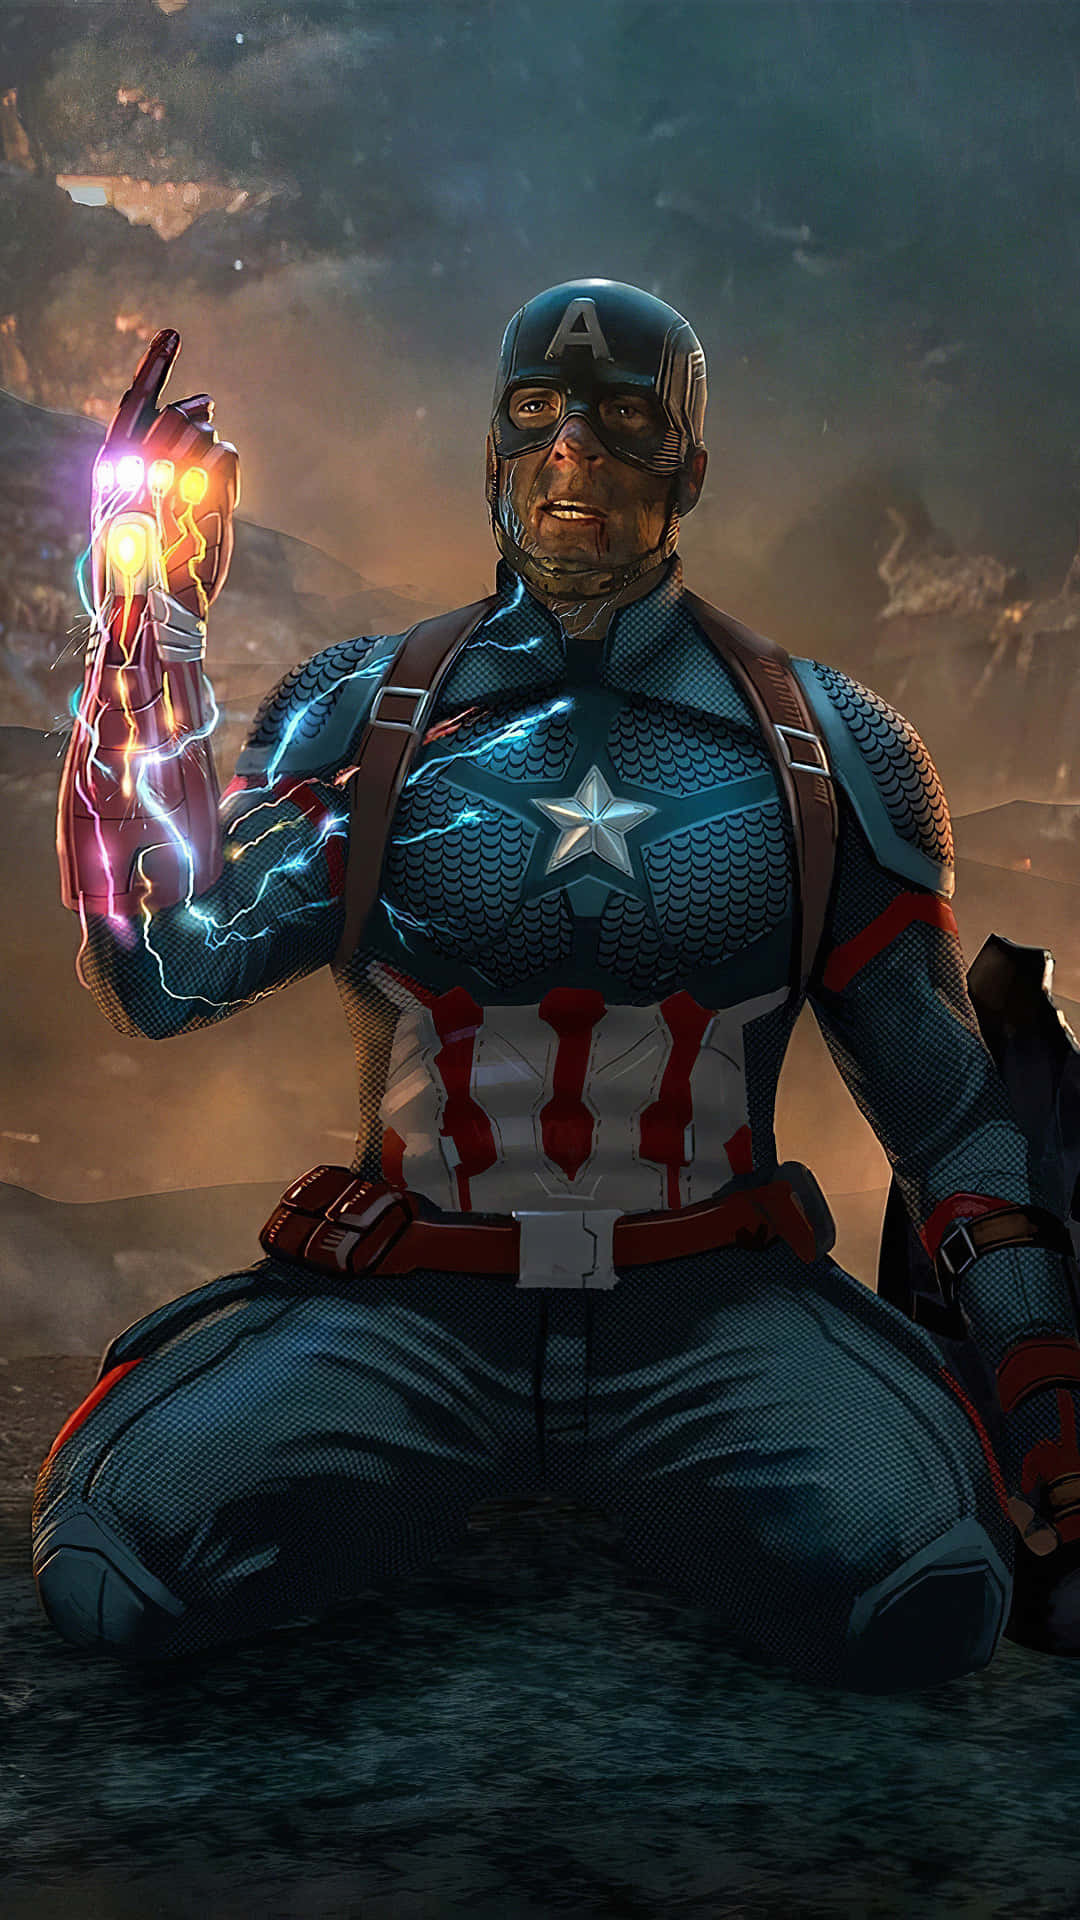 Fondode Pantalla De Fanart De Capitán América Alternativo En El Universo Paralelo